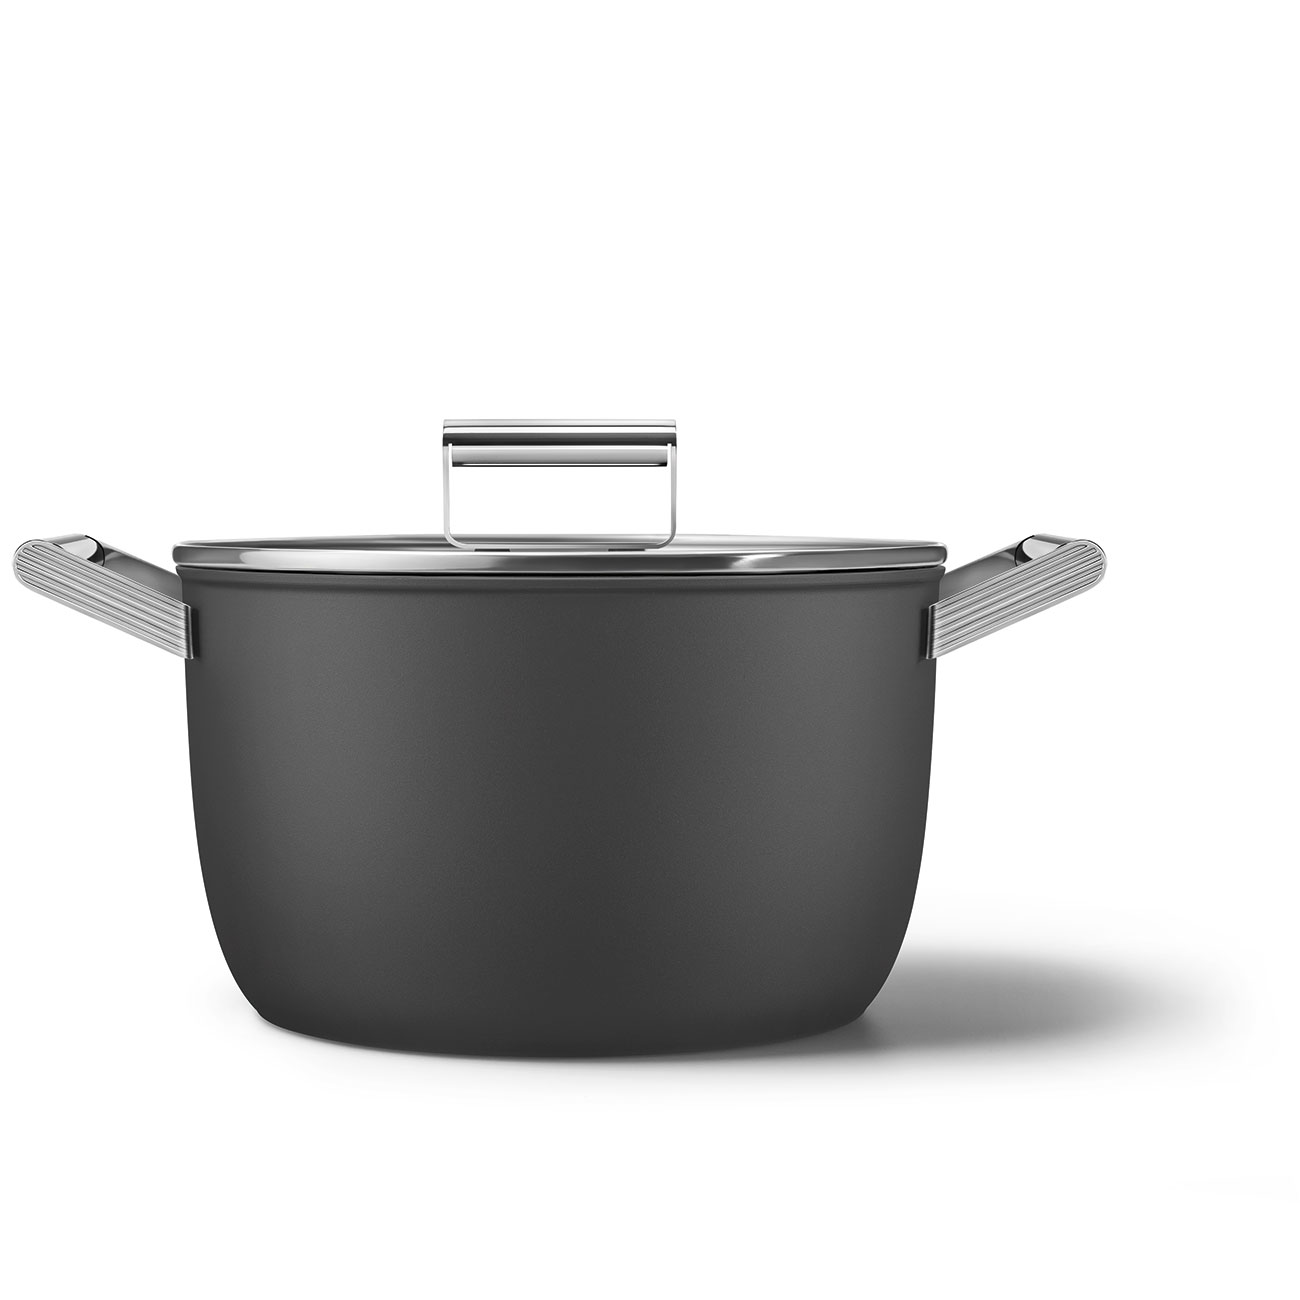 SMEG Cookware 50'S Style Siyah Tencere Cam Kapaklı 26 cm